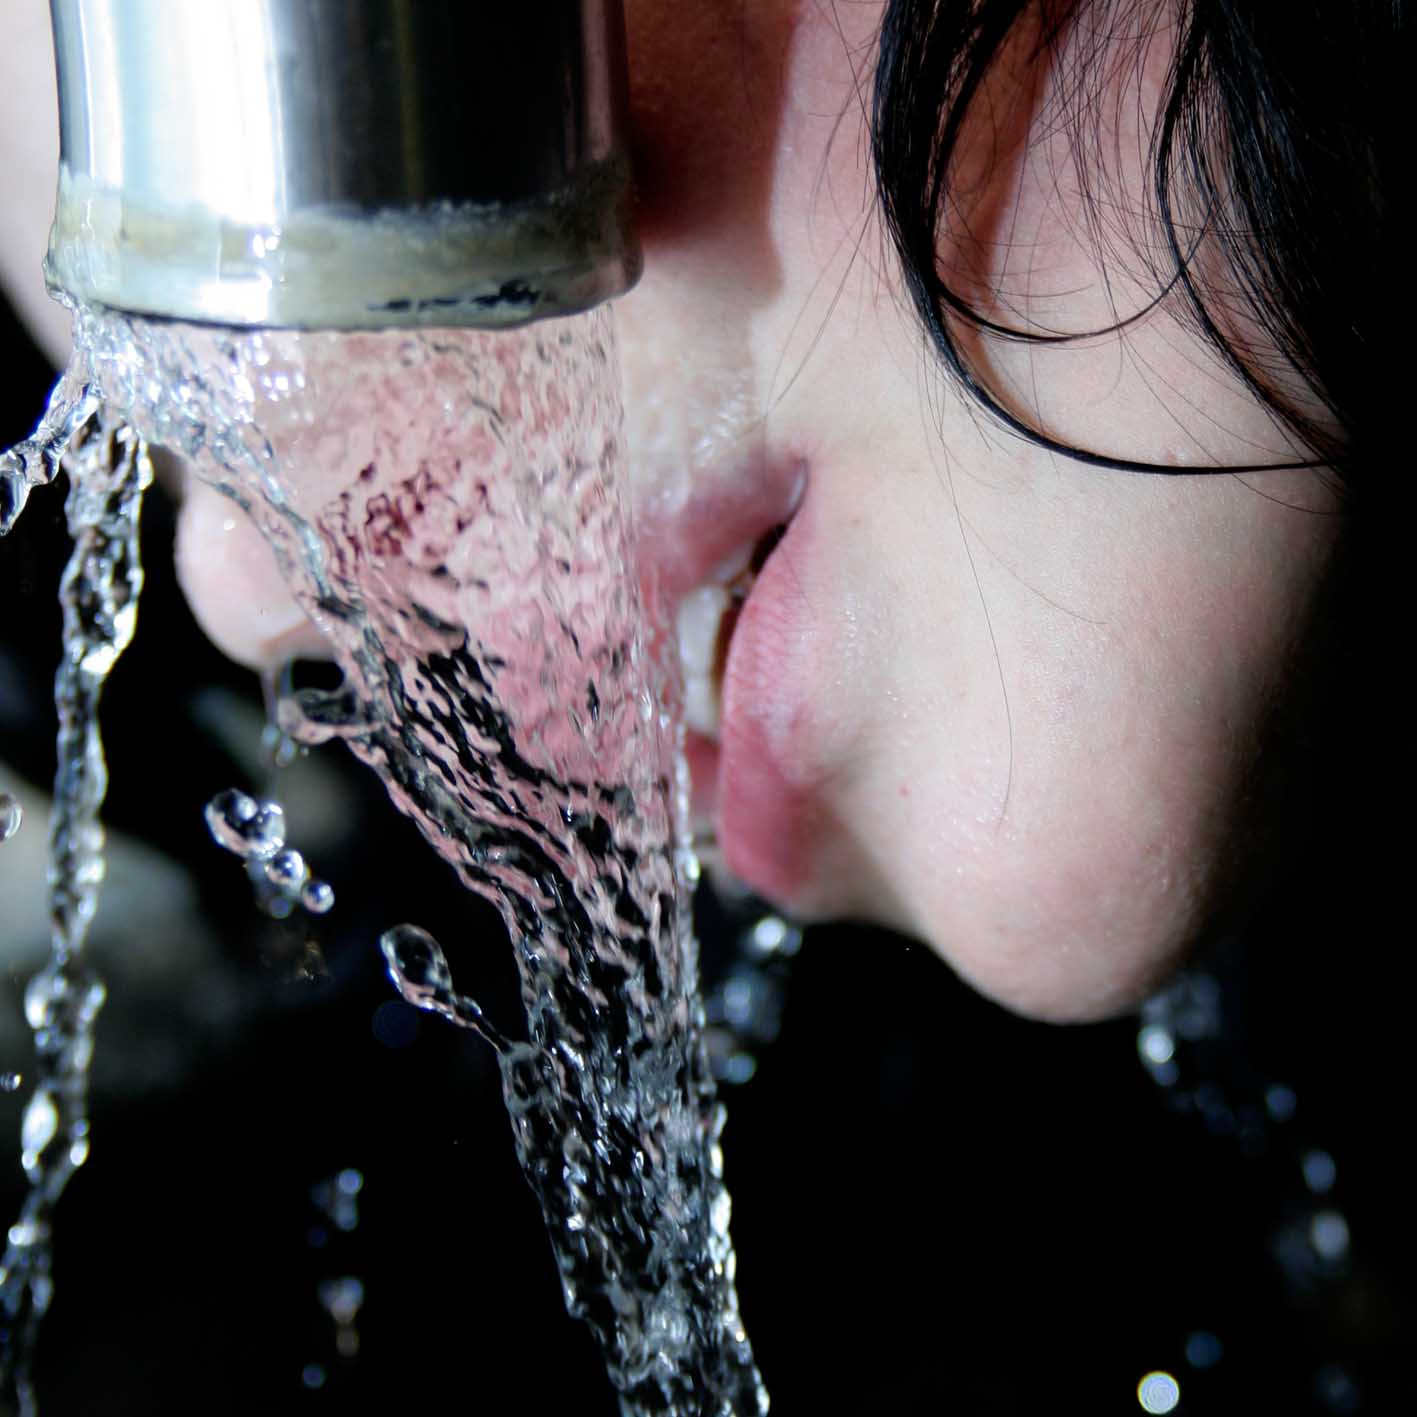 Течет вода изо рта. Девушка под струей воды. Девушка пьет воду из под крана. Красивые девушки текут. Девушка и кран с водой.